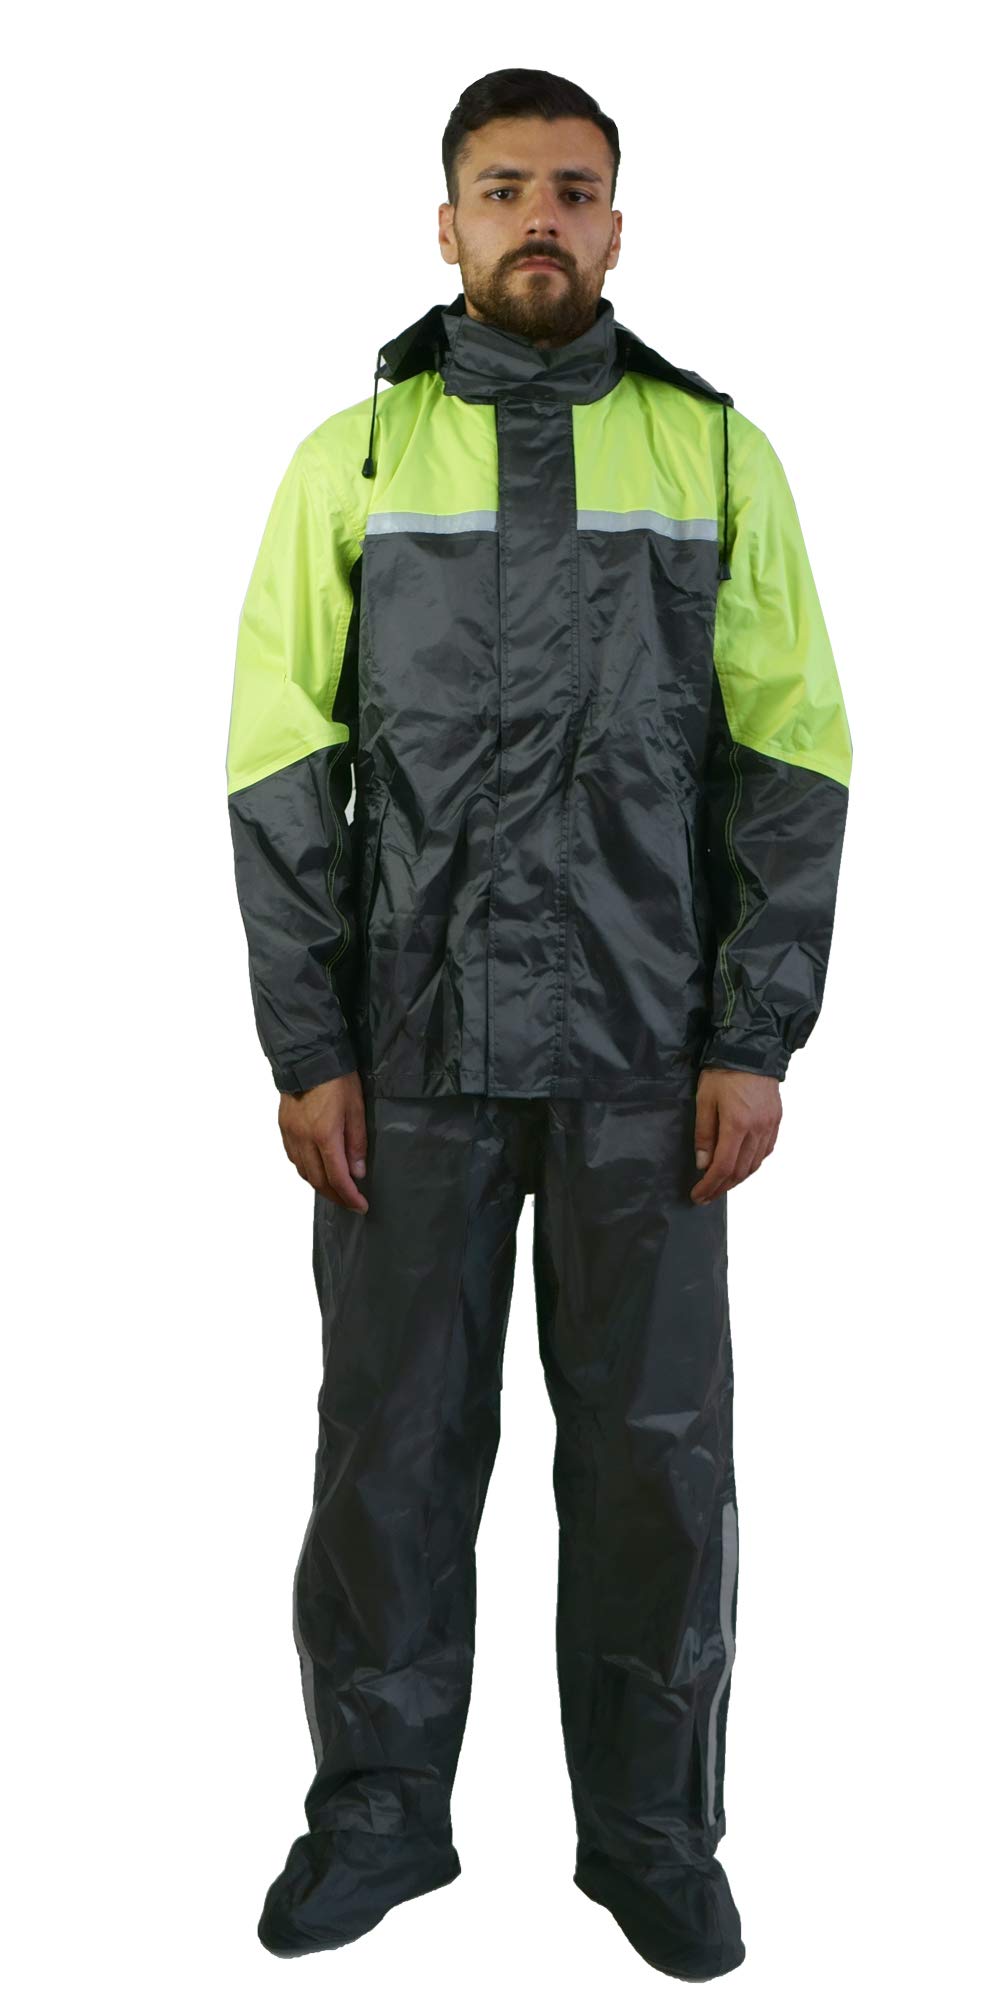 TJ MARVIN Regenschutz Set (Jacke, Hose, Stiefelbezug und Rucksäcke) CLASSICO E31 XL Nero Giallo fluo von TJ MARVIN